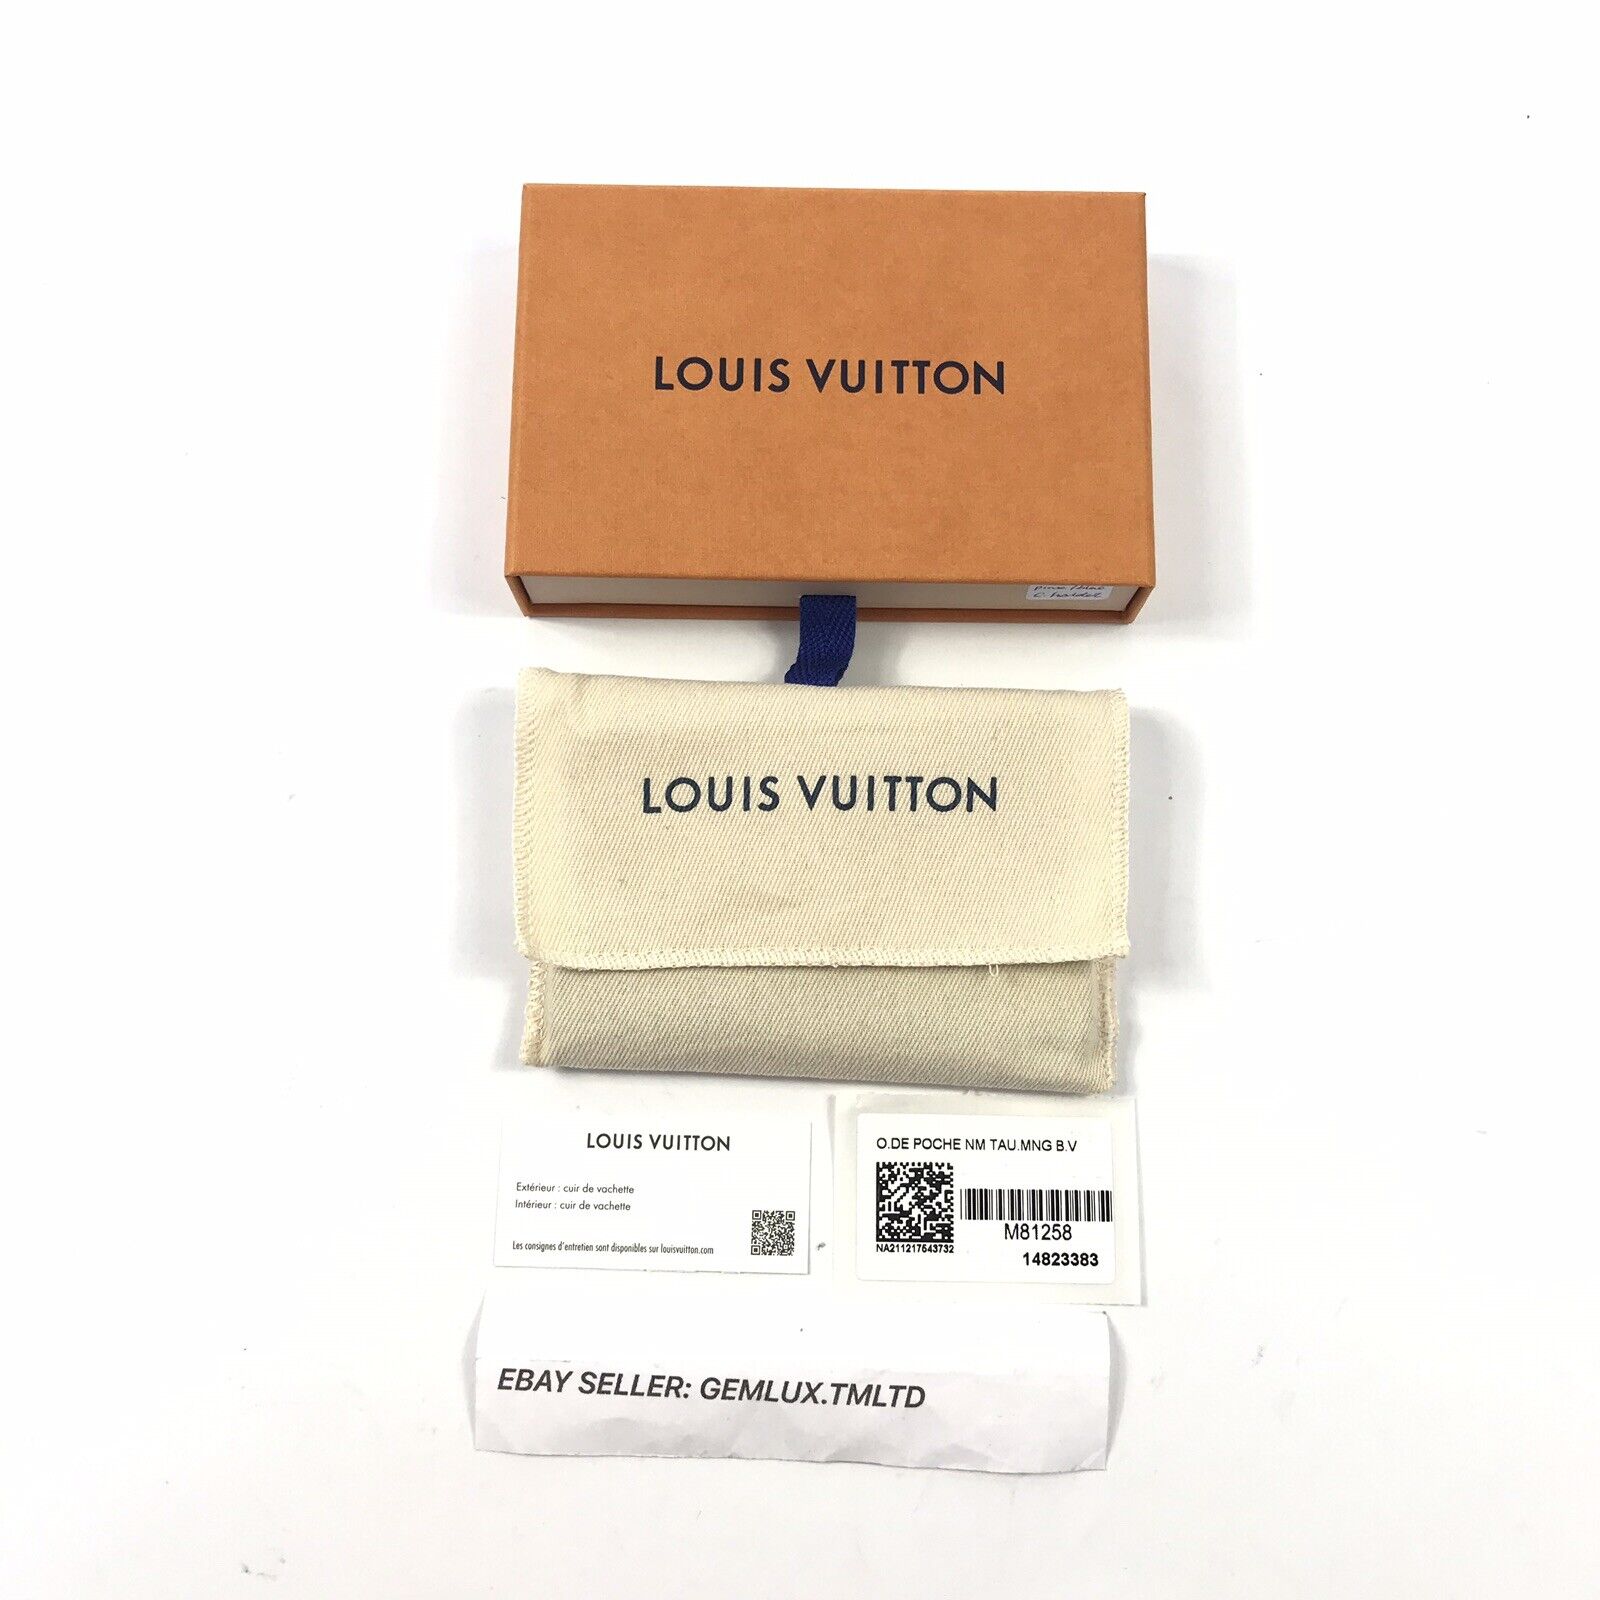 LOUIS VUITTON ILLUSION GREEN/BLUE M81258 CARD HOLDER